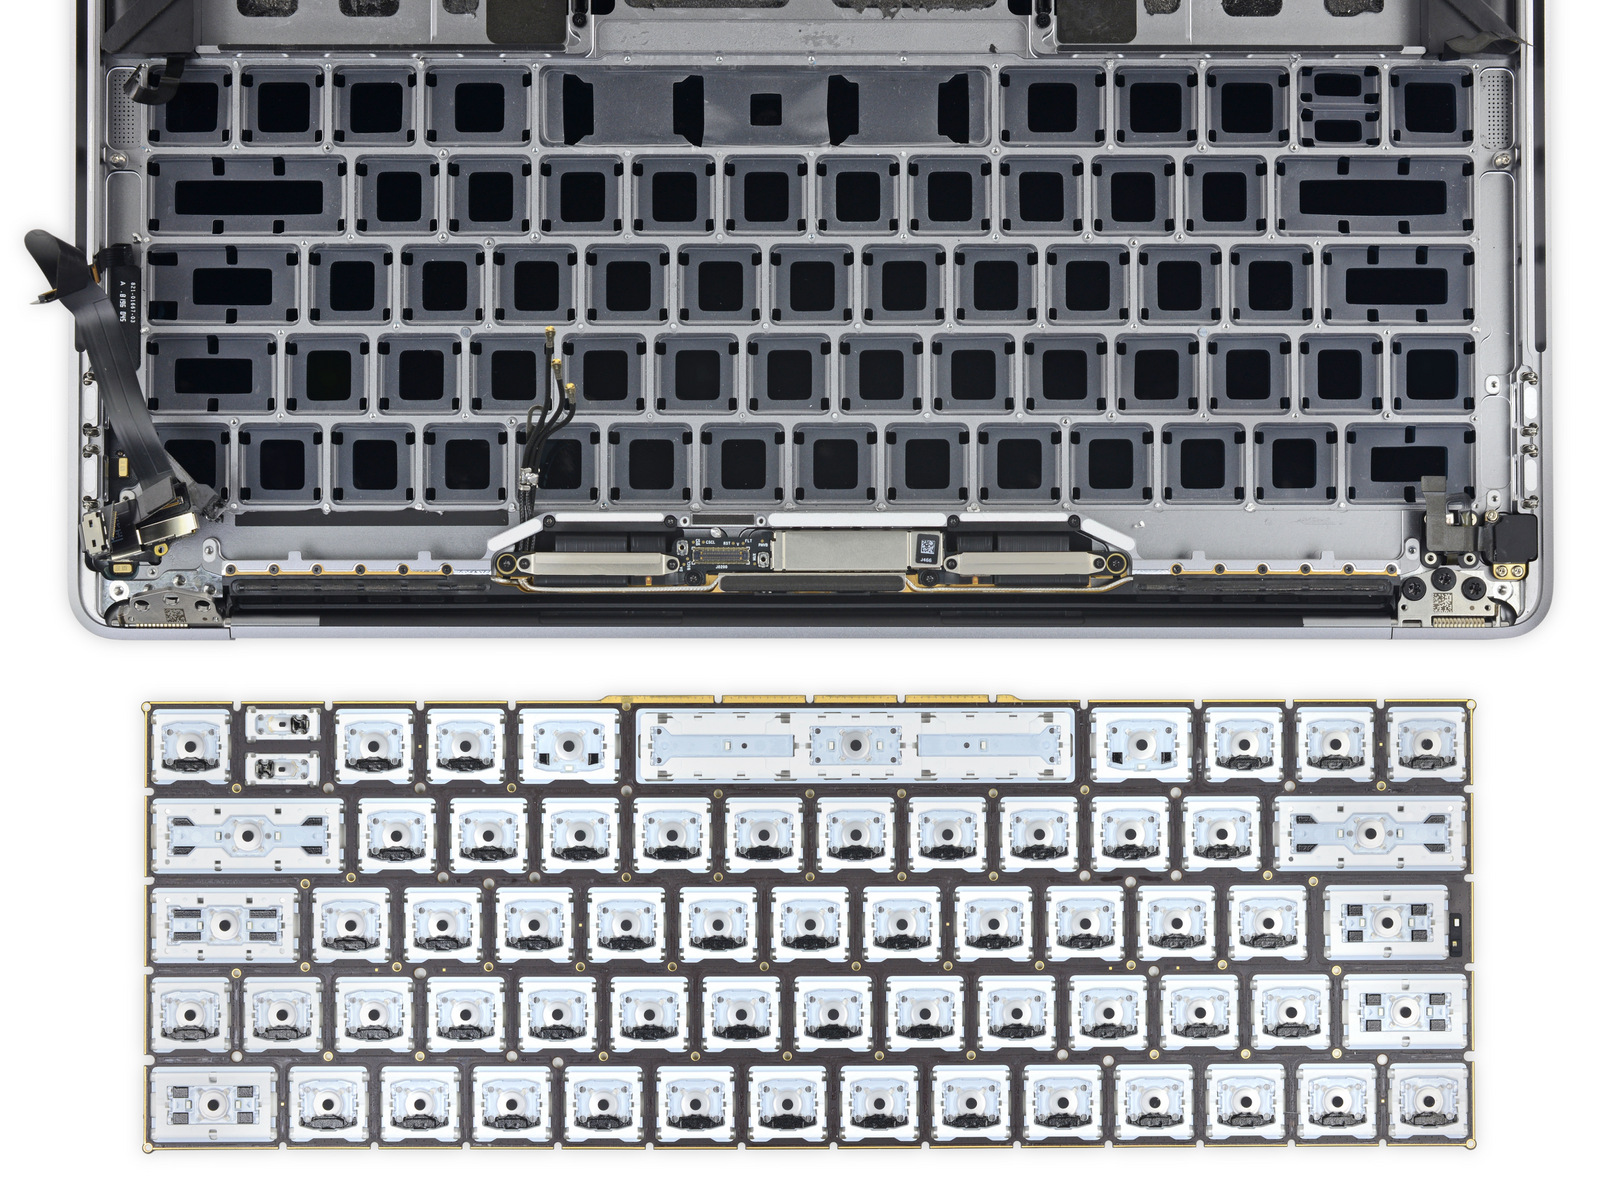 ifixit-macbook-pro-2018-keyboard-5.jpg